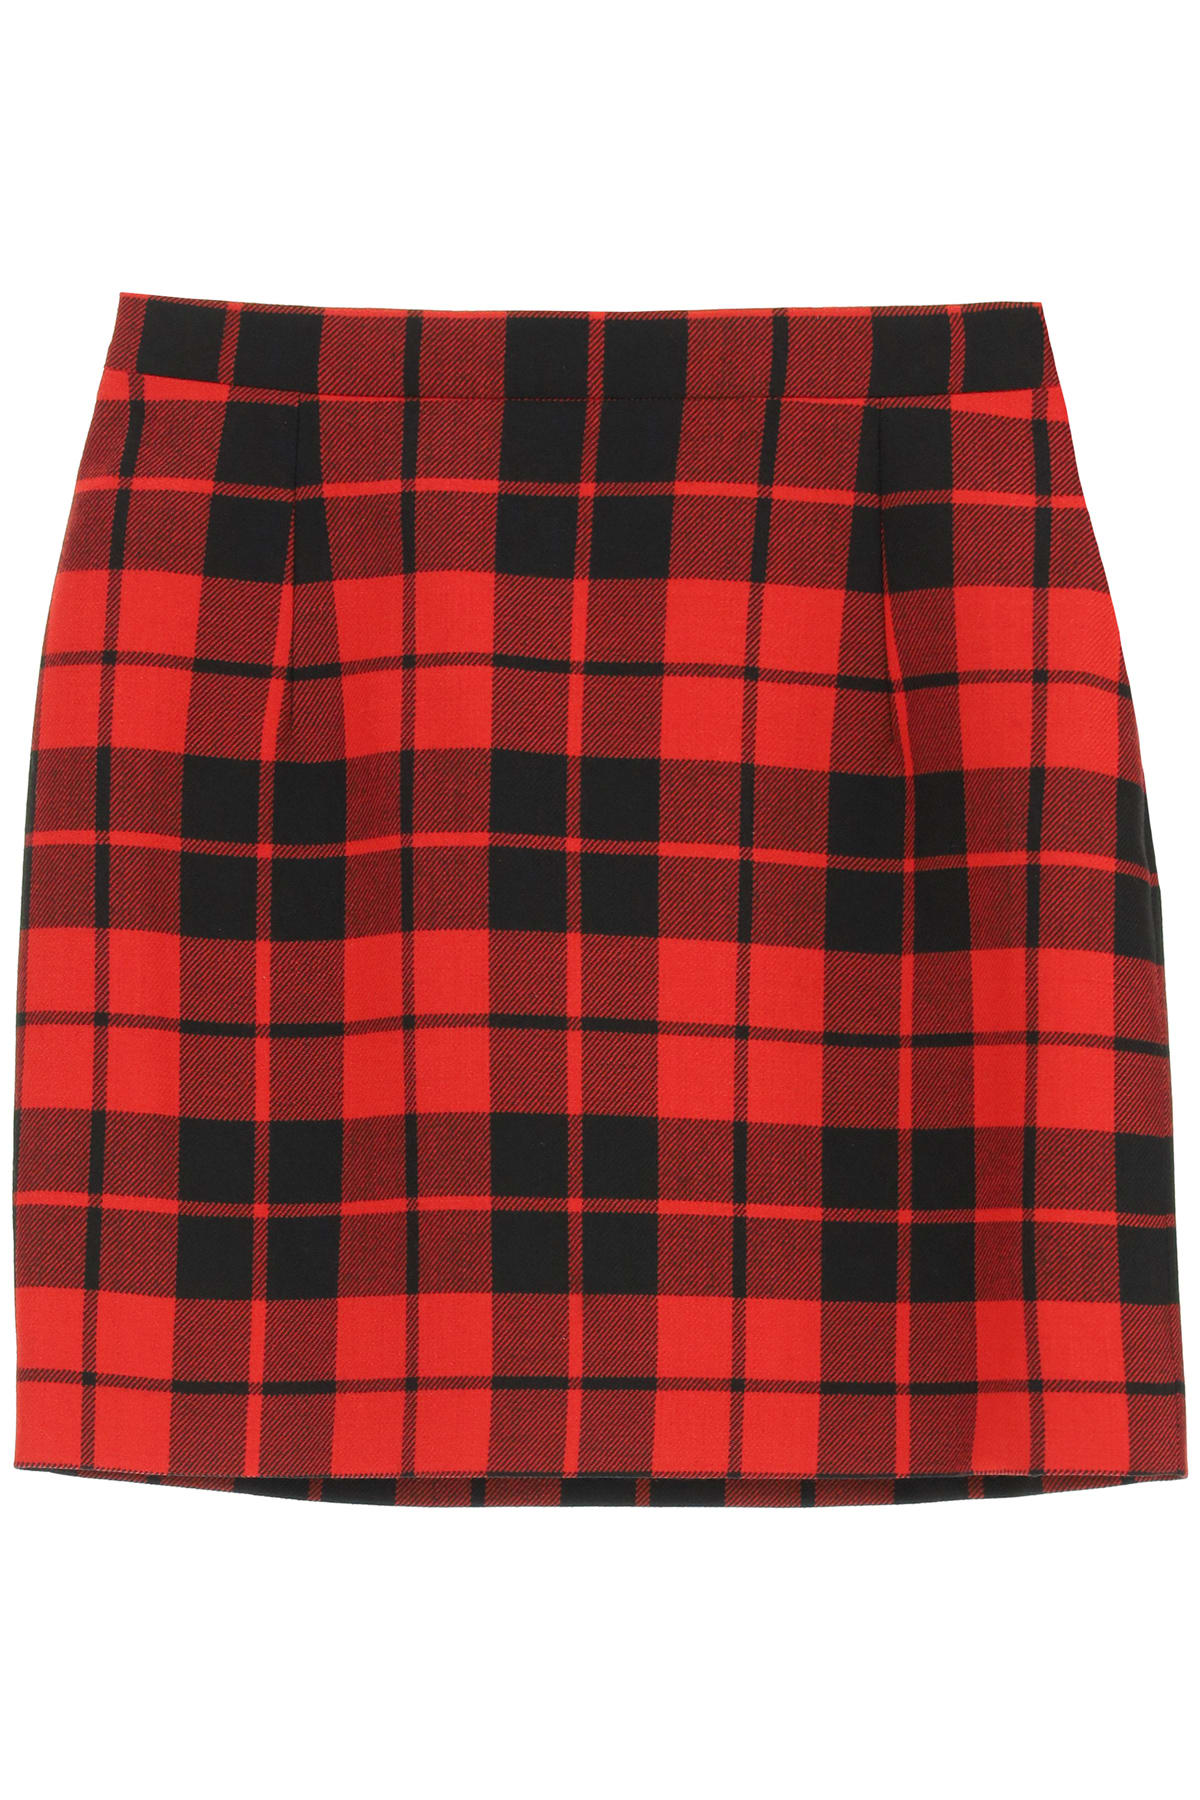 Alessandra Rich Check Wool Mini Skirt